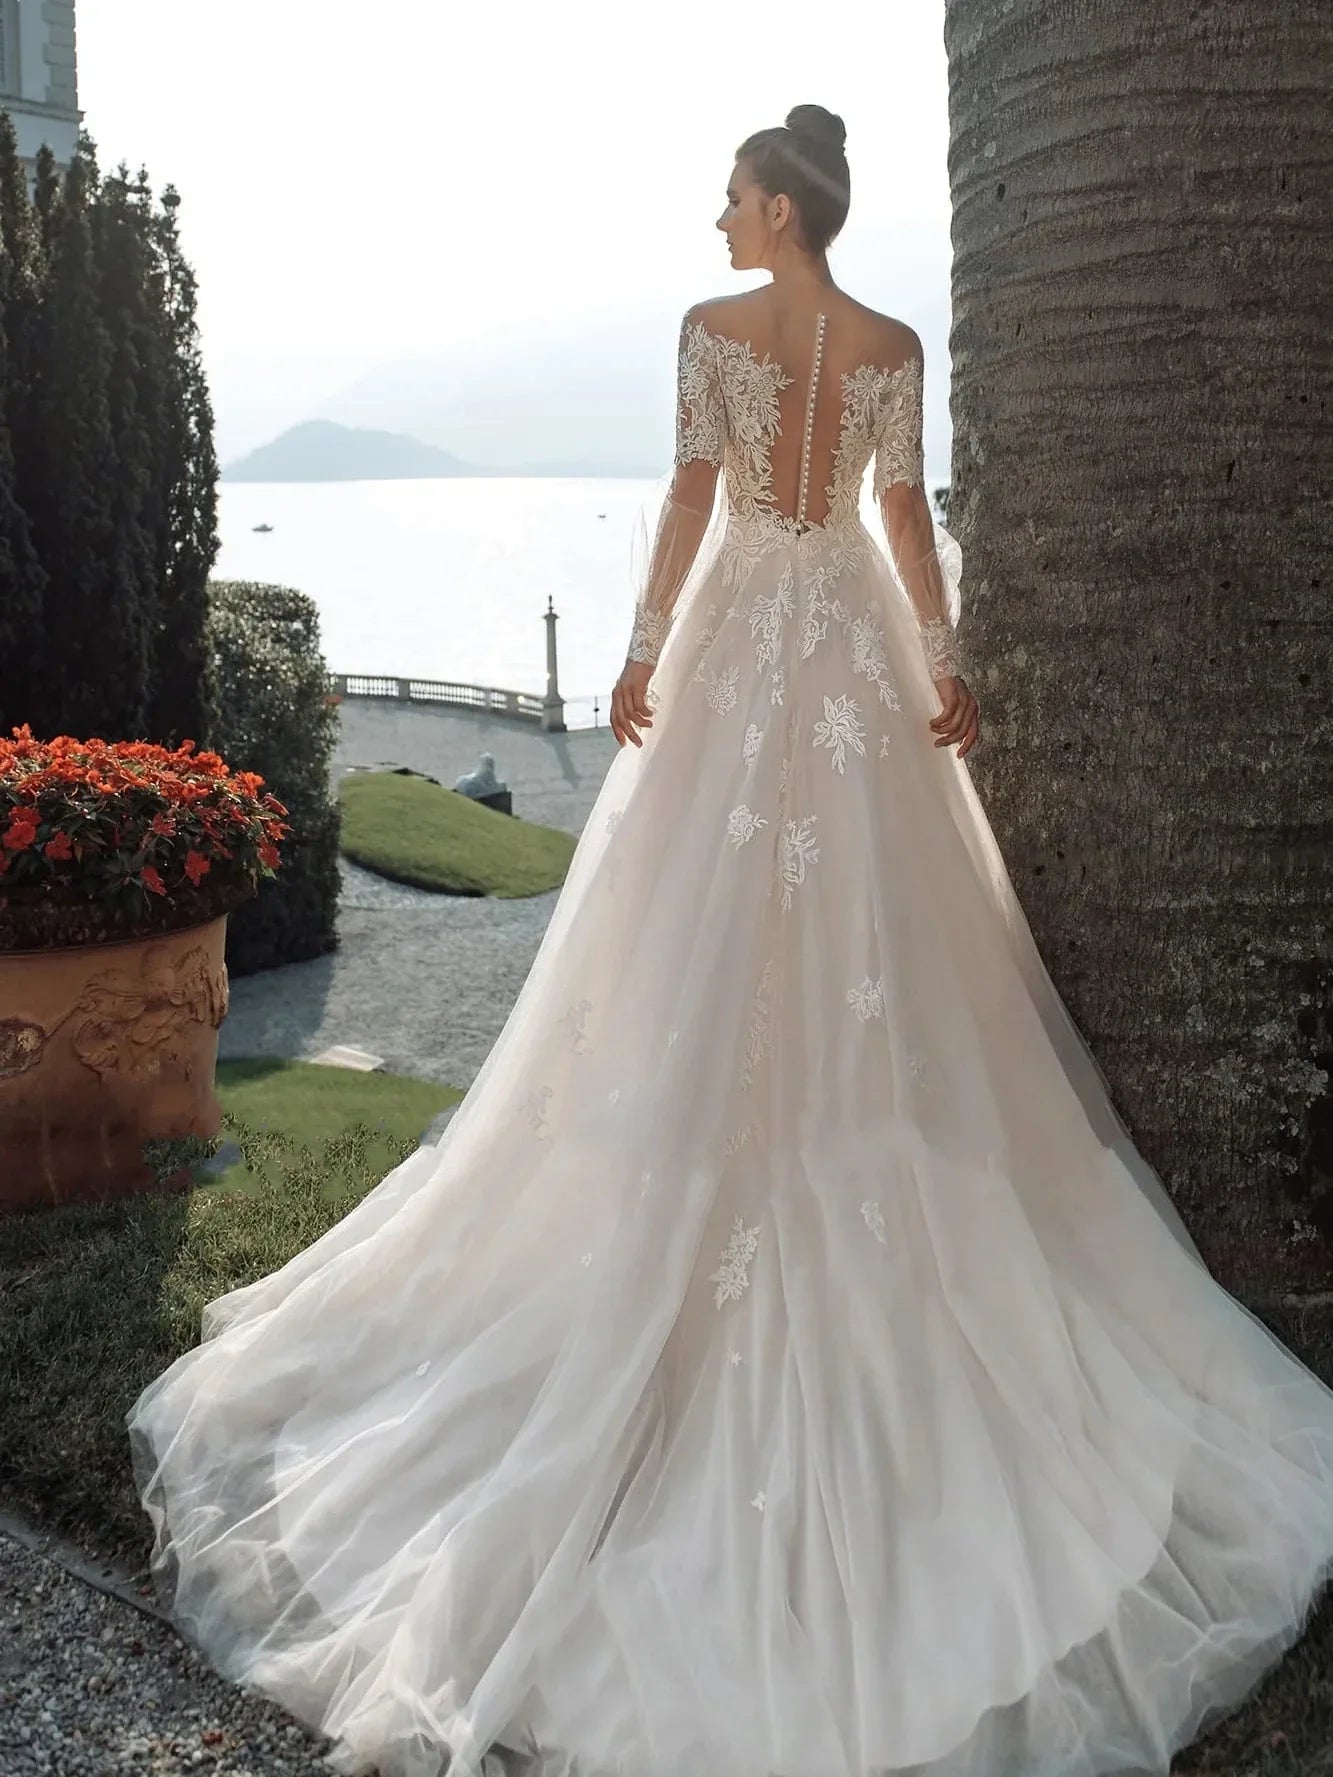 Luxury Wedding Dresses For Women A-Line Bridal Gowns Lace Appliques Full Sleeves Floor Length Robes Vestidos De Novia